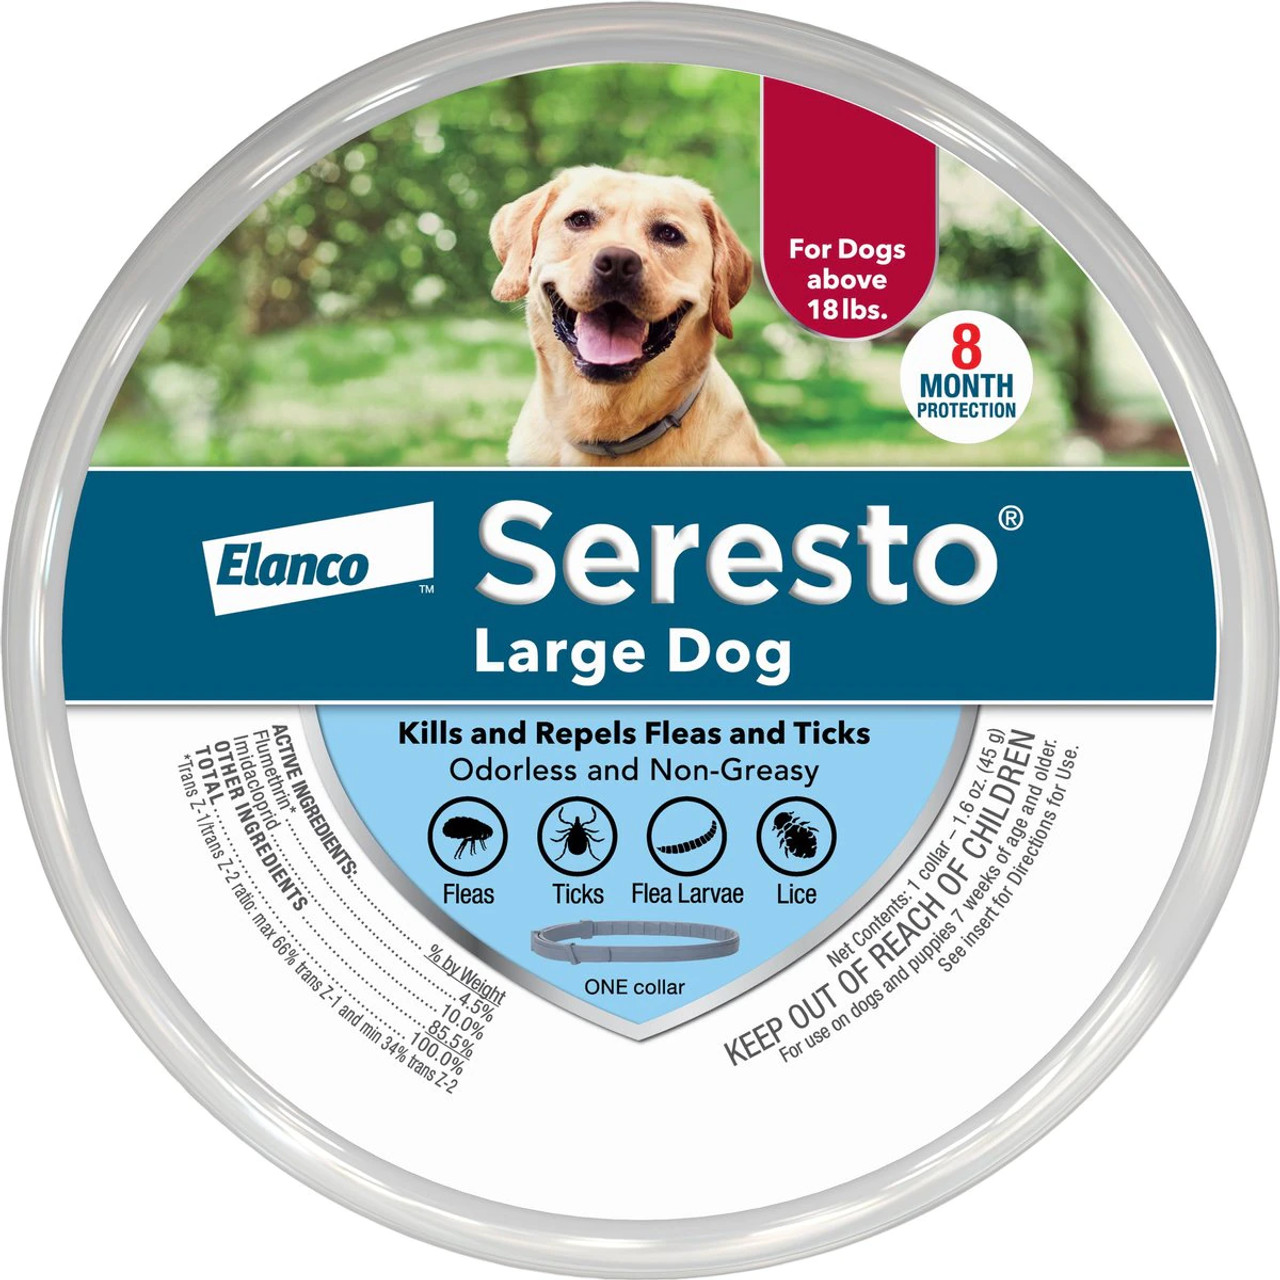 vergeven neef Mysterieus Seresto Flea & Tick Collar for Large Dogs (18 lbs+) - Pet Wish Pros